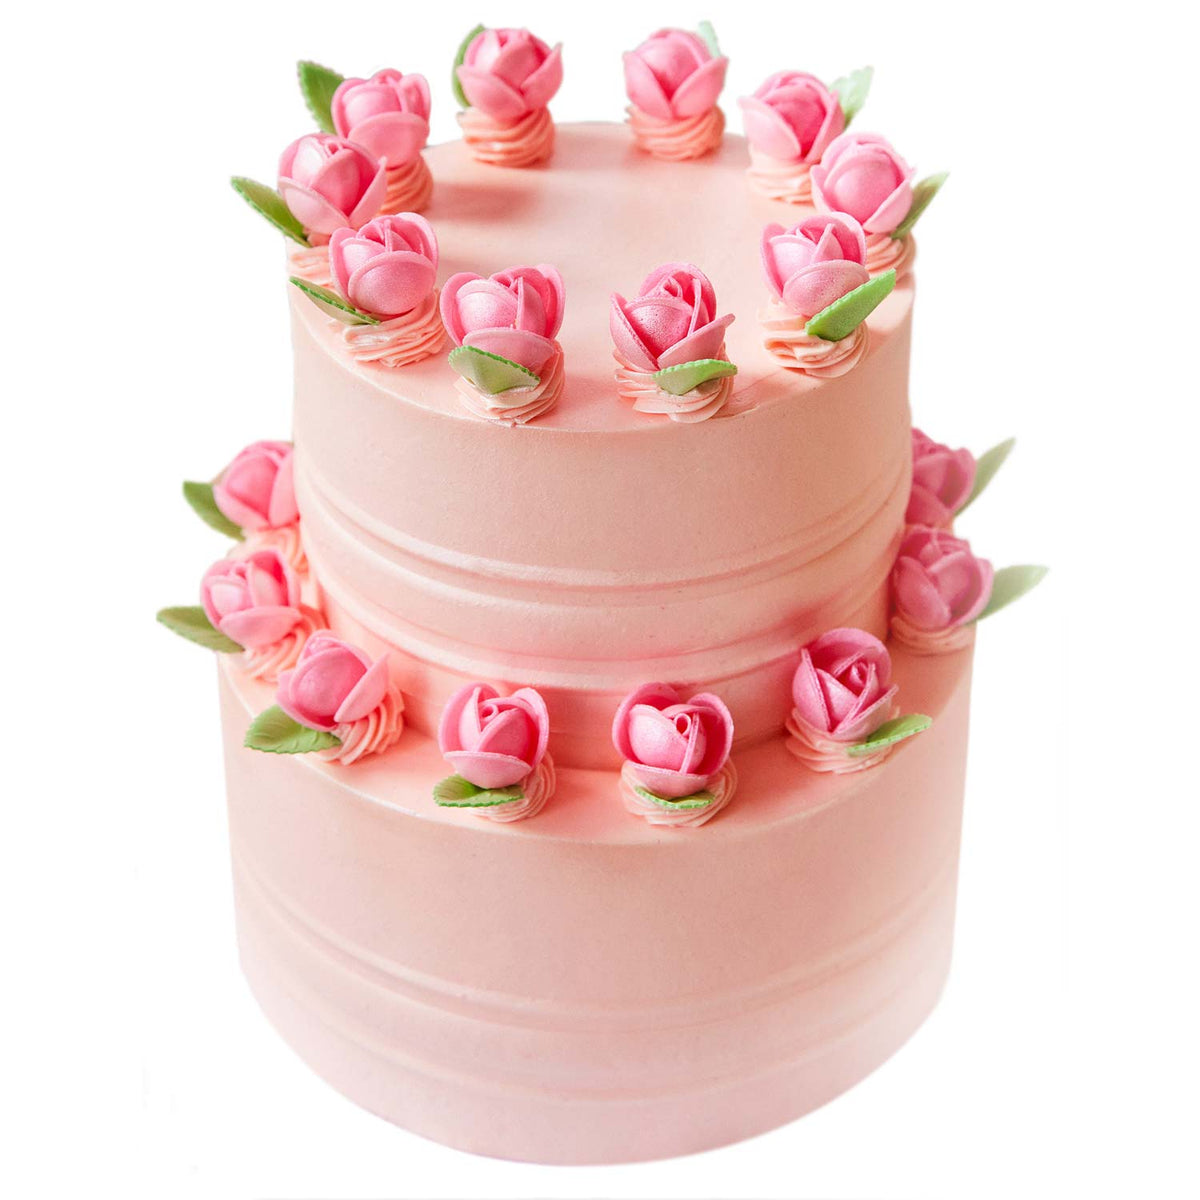 Buy Milestone Cake Online | Send Two-Tier Cake Online for Loved Ones – Kukkr